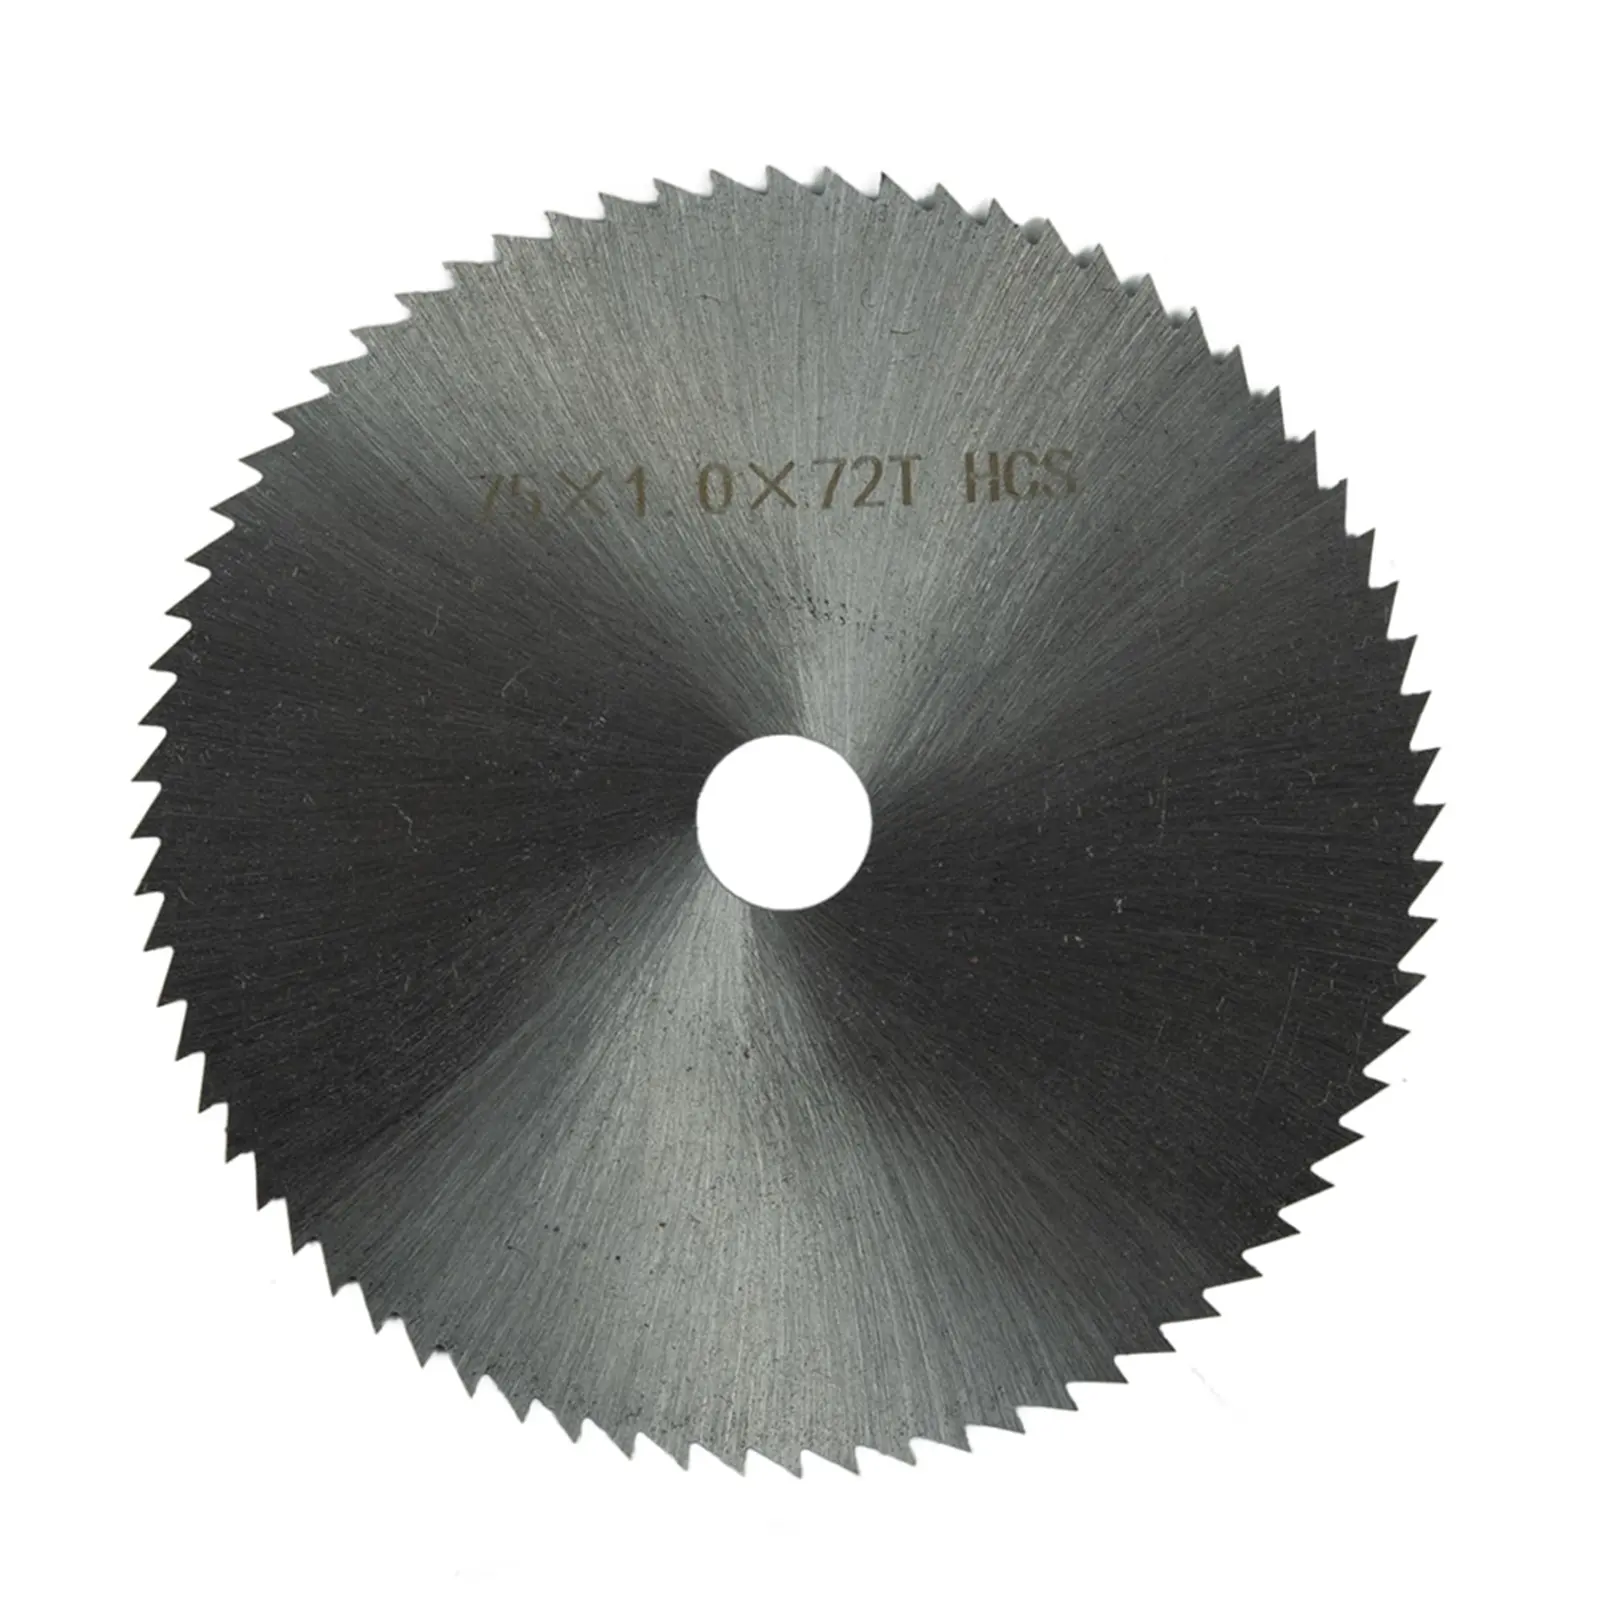 Aluminum Saw Blade For Metal Cutting Hss Cutting Disc 115mm Saw Blade For Porcelain Tile Cutting Disc